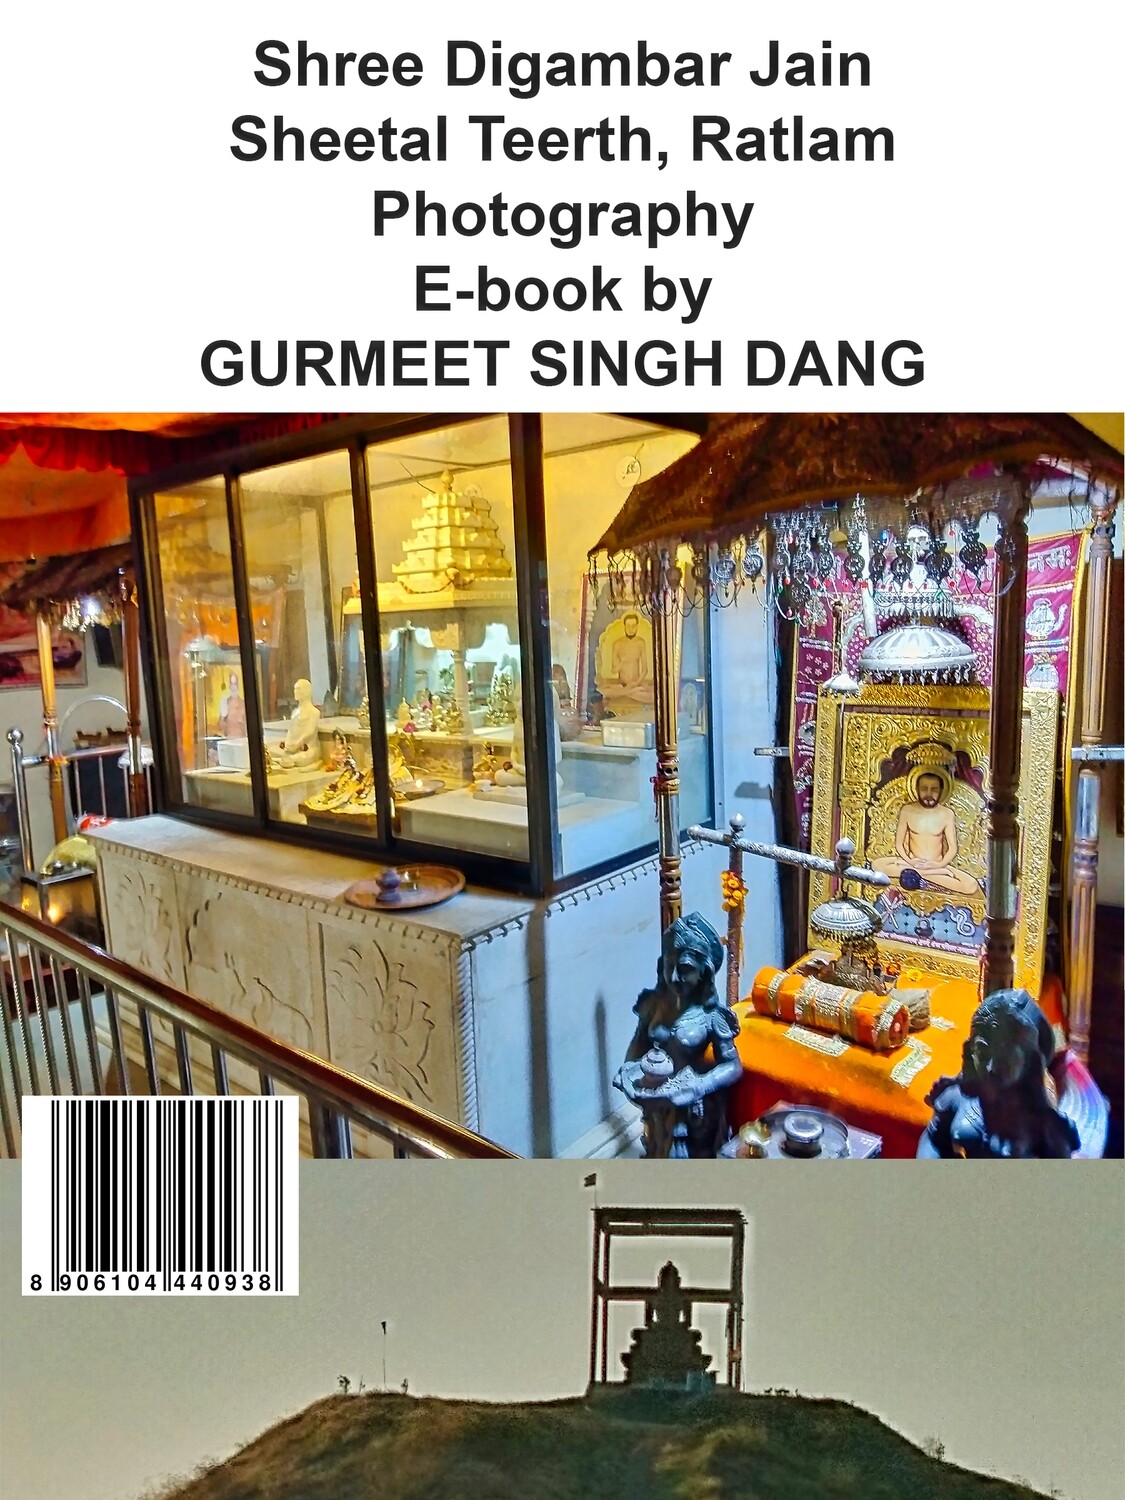 Shree Digambar Jain Sheetal Teerth, Ratlam Photography E-book by GURMEET SINGH DANG